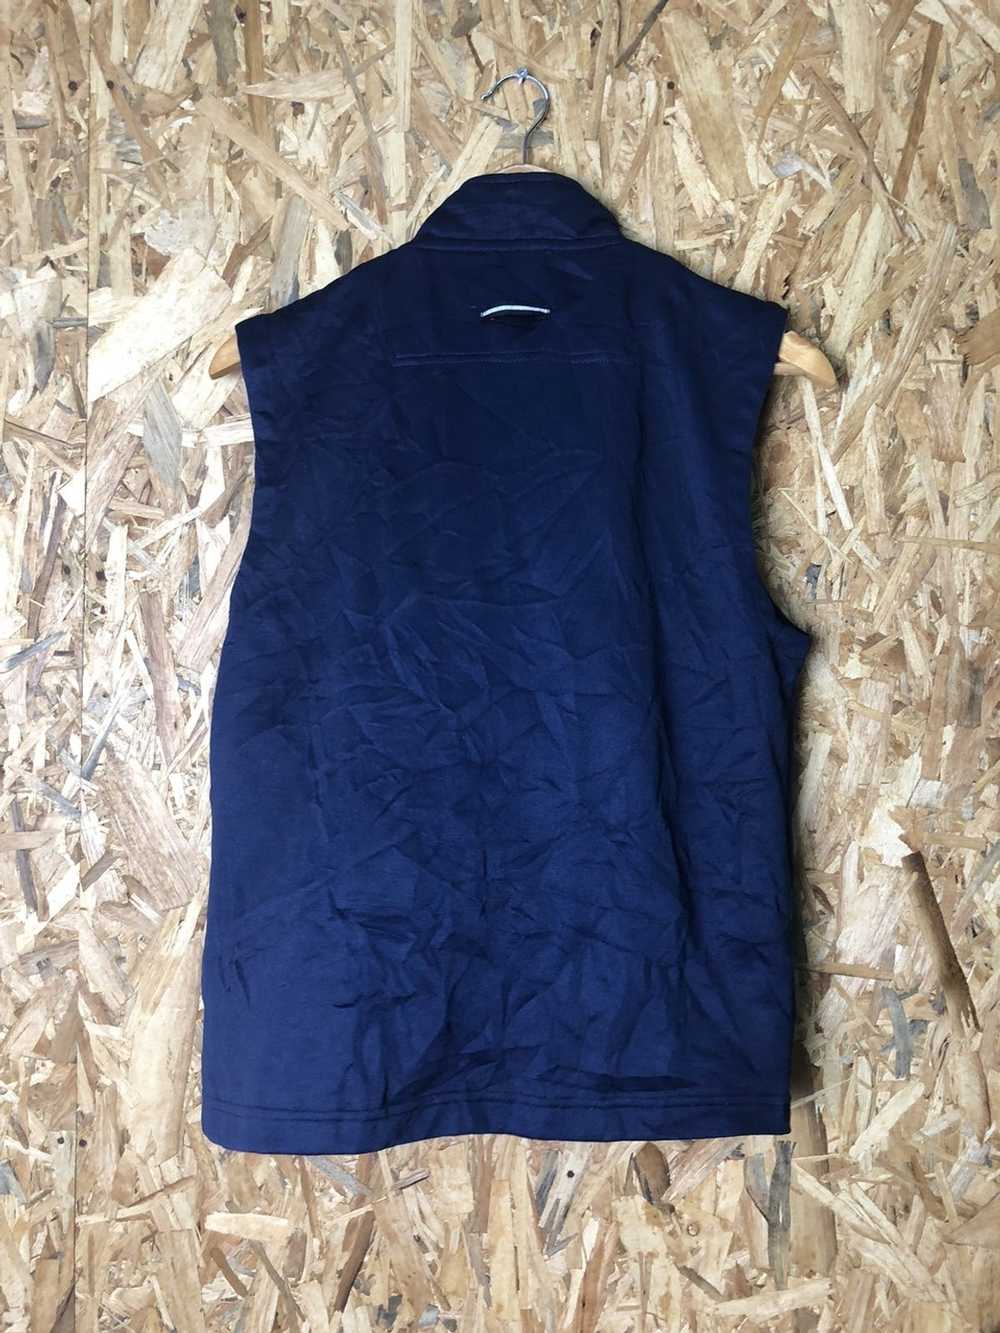 Japanese Brand First Down Vest Zip Nice Design - image 2